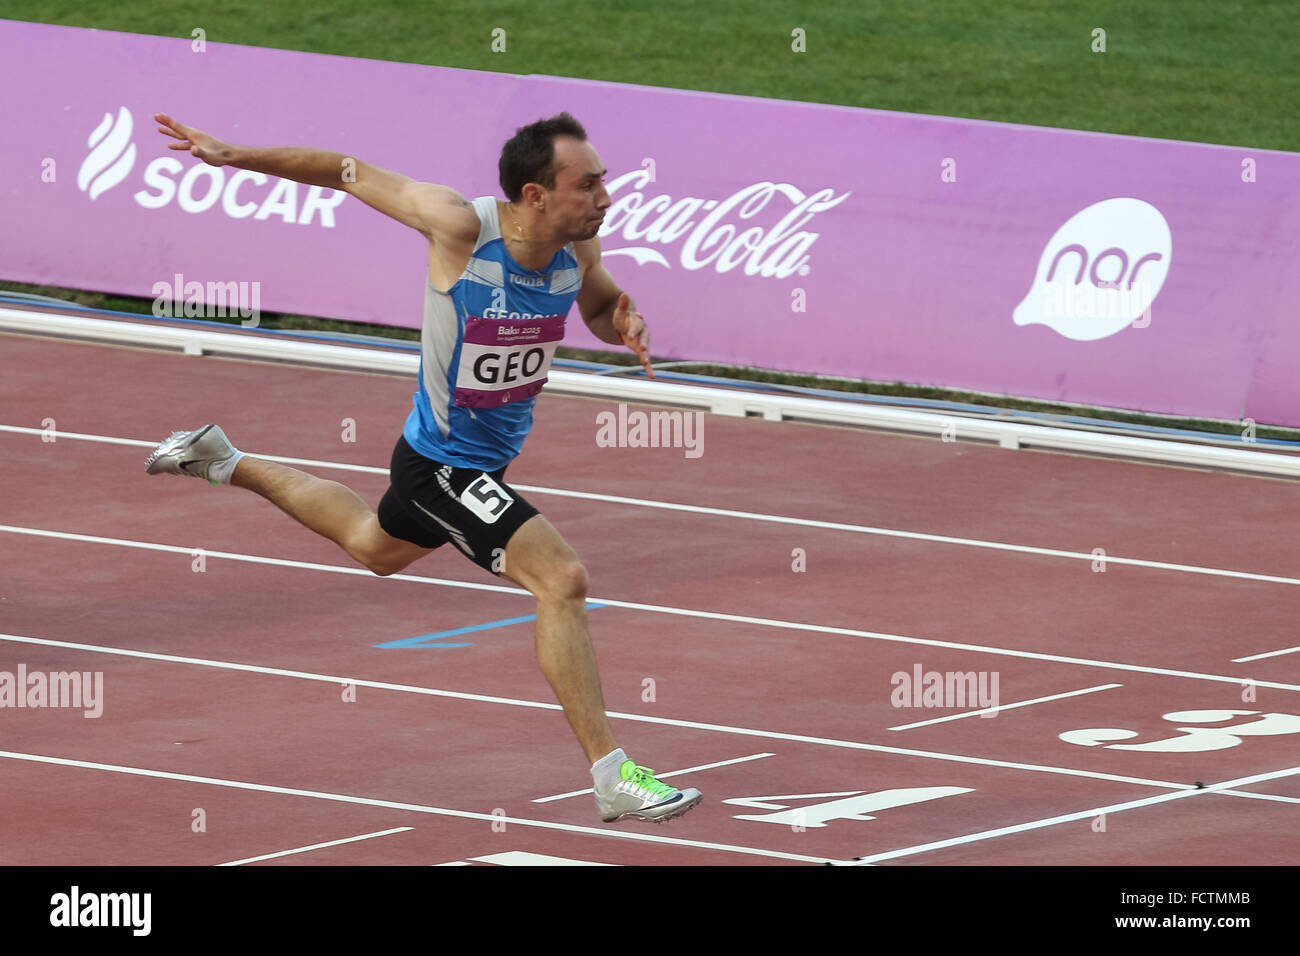 Nika Kartavtsevi (GEO) wins his Men's 100m heat. Athletics. Olympic Stadium. Baku2015. 1st European Games. Baku. Azerbaijan. 21/06/2015 Stock Photo